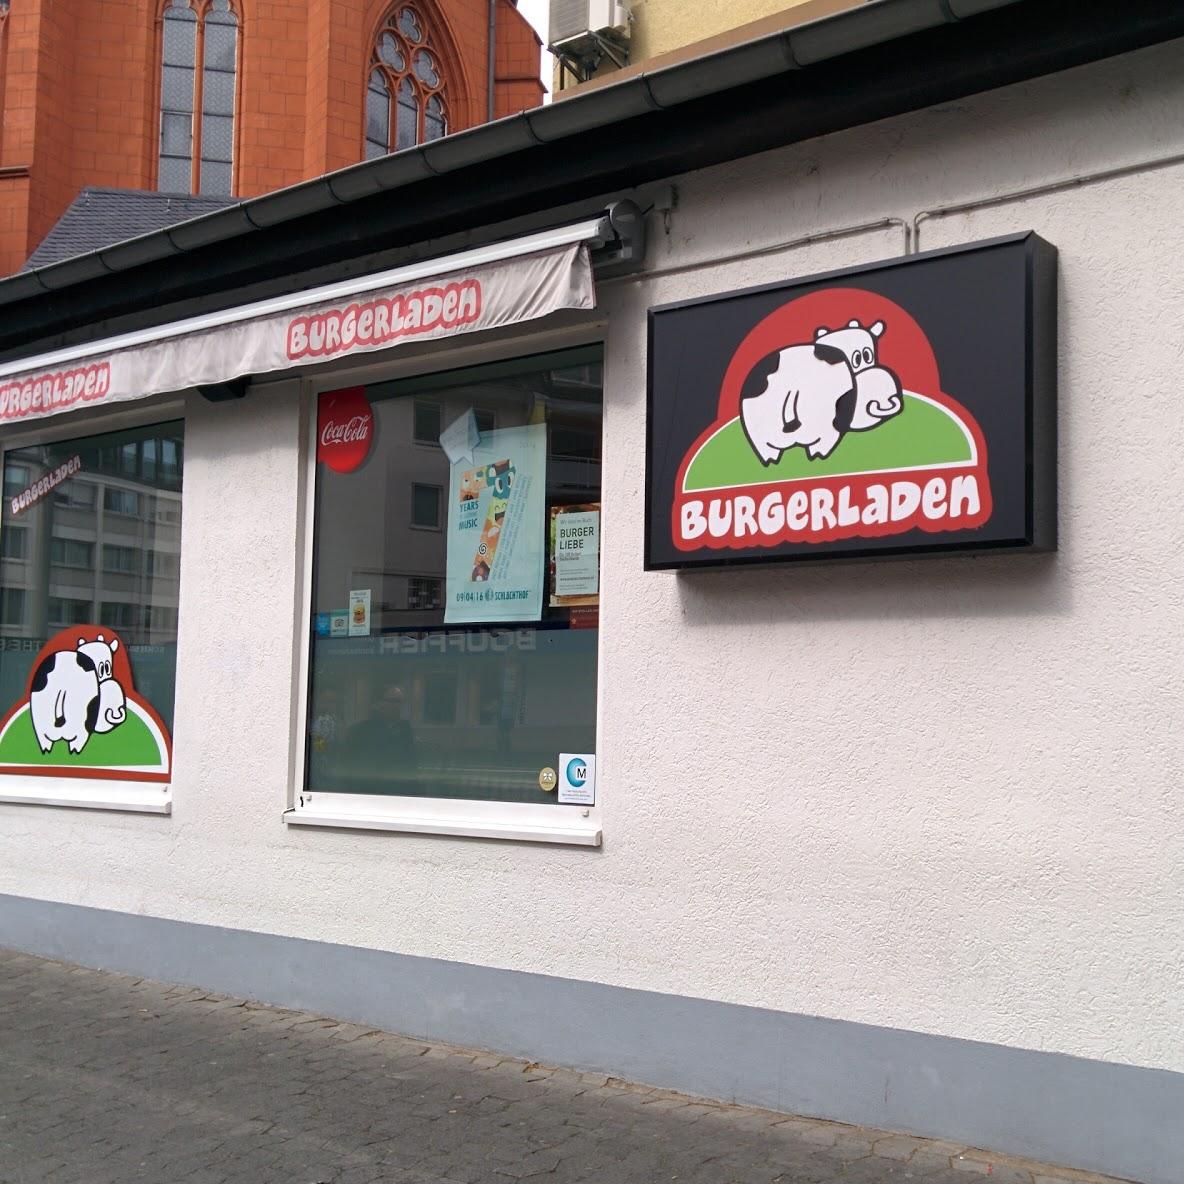 Restaurant "Burgerladen" in Mainz